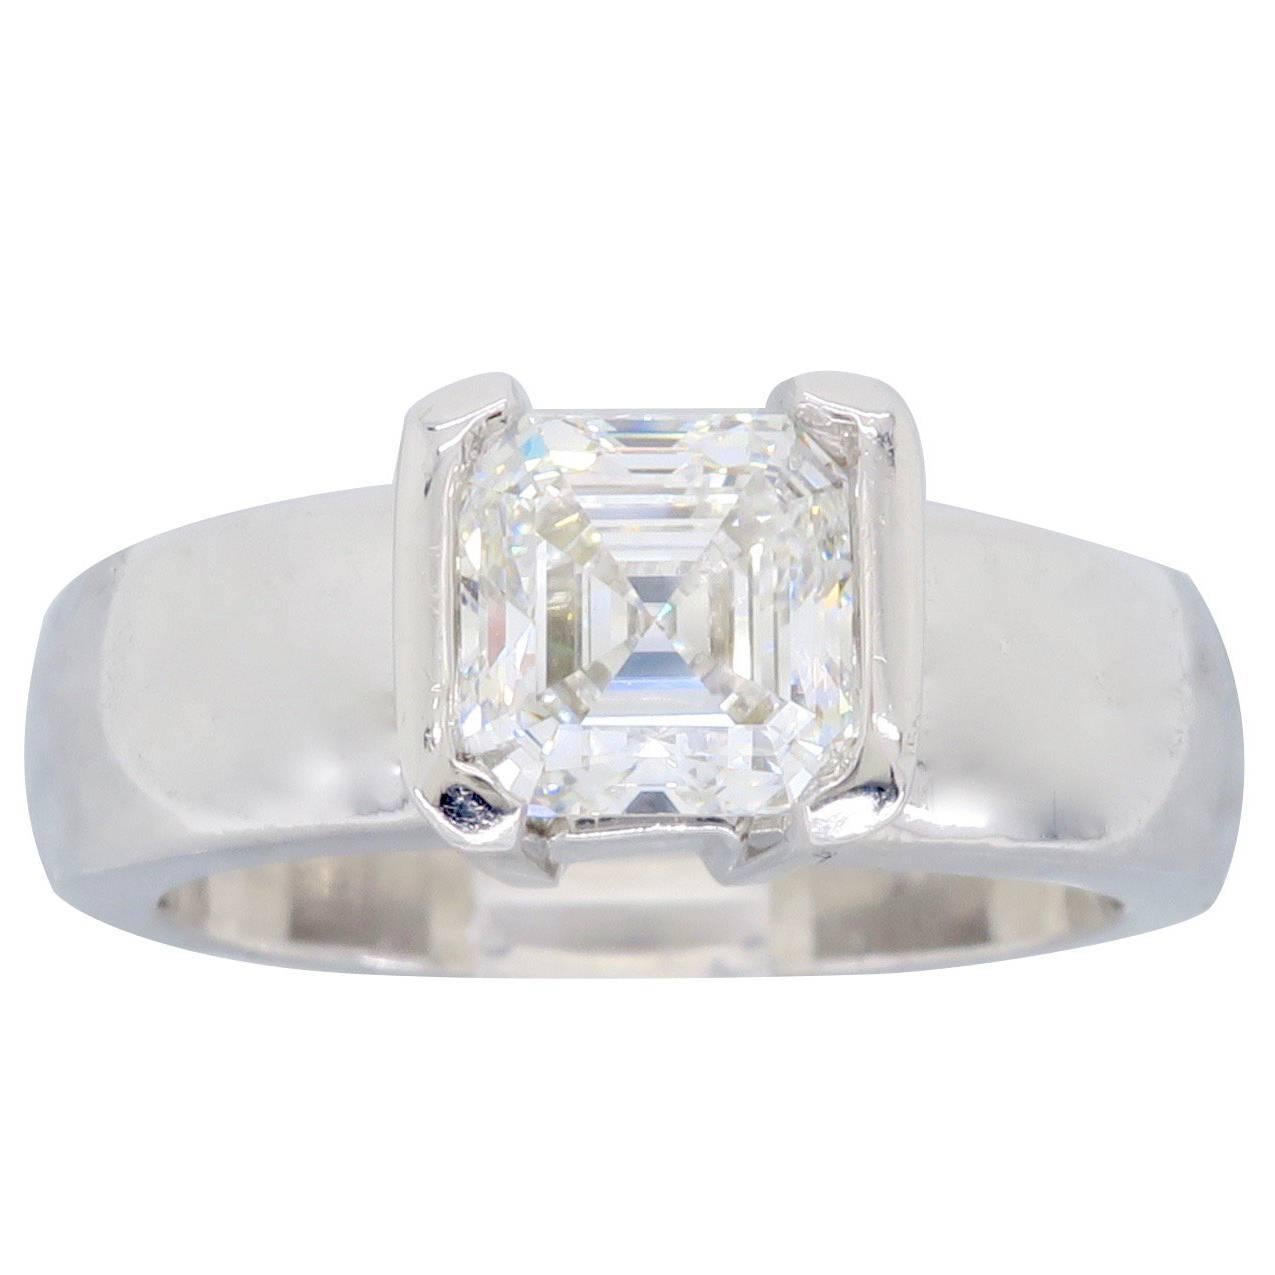 1.56 Carat GIA Square Emerald Cut Diamond Ring